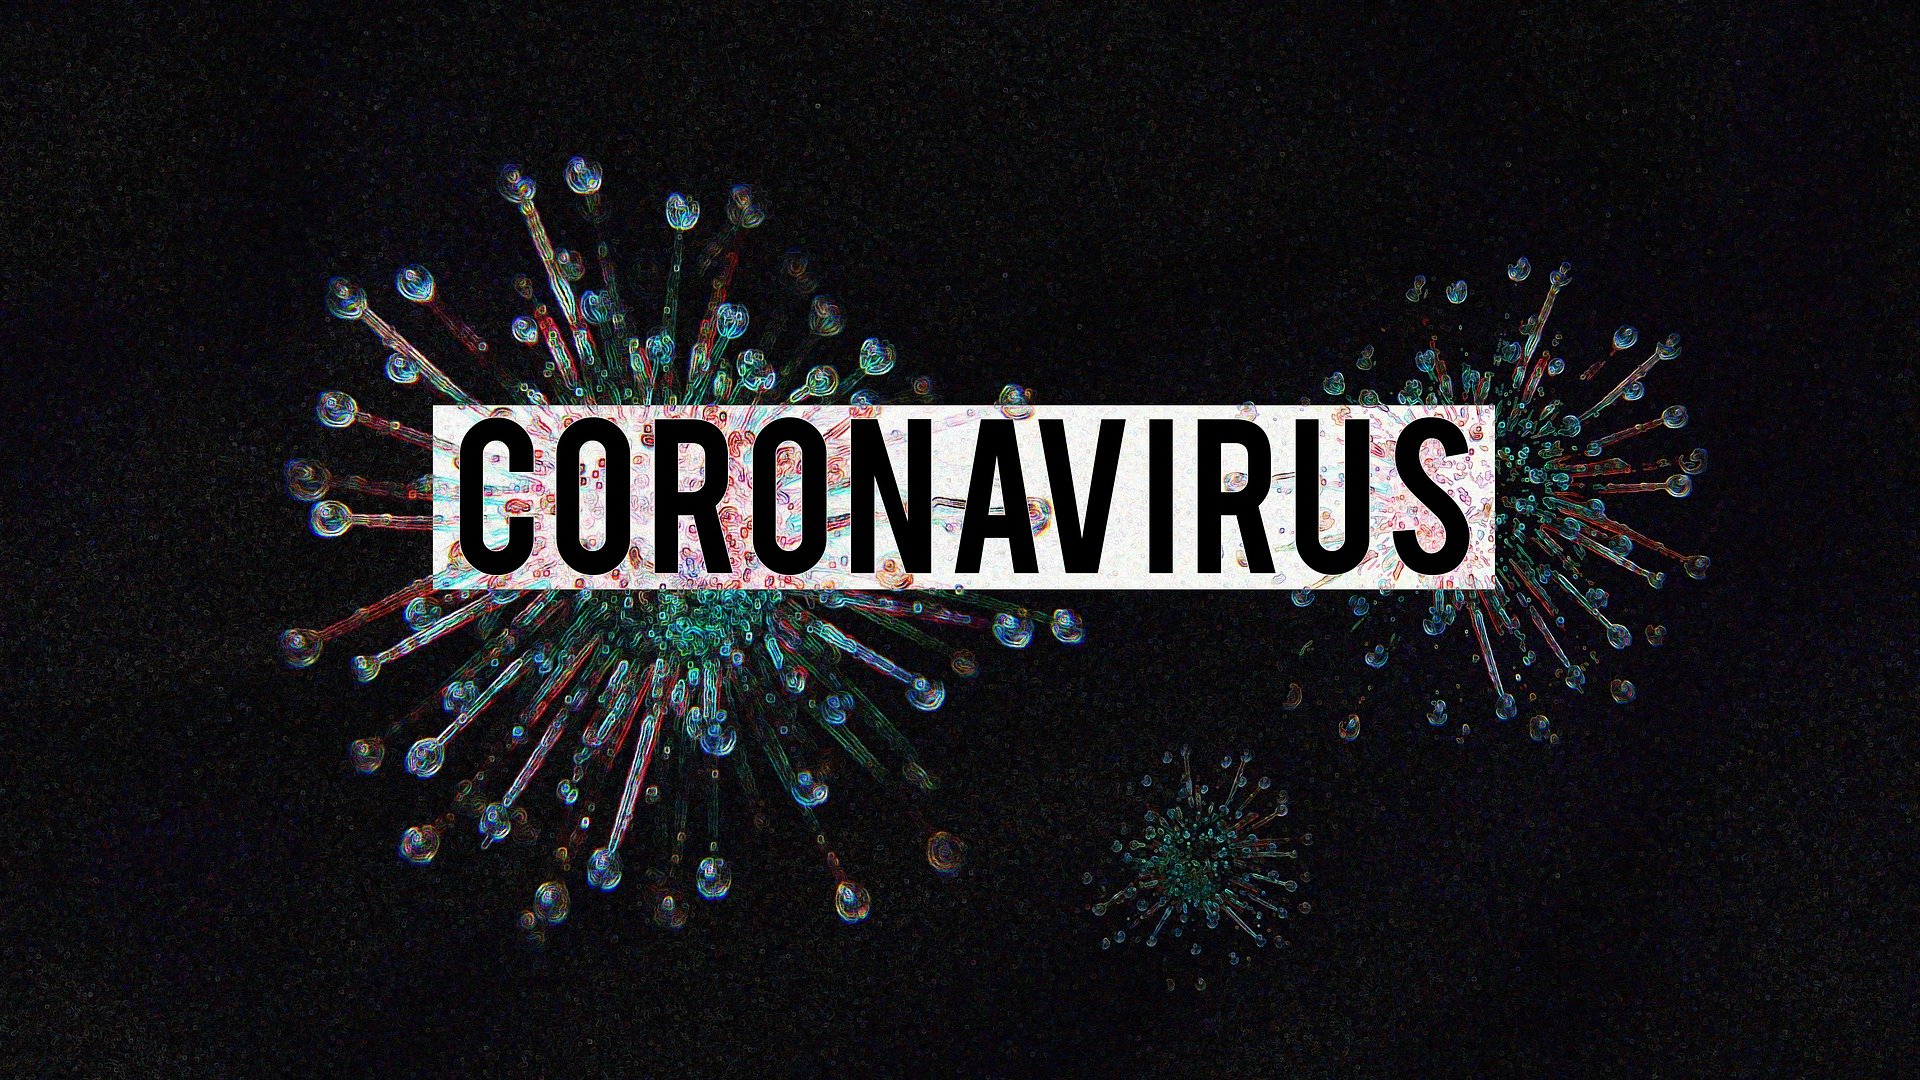 Text: Coronavirus